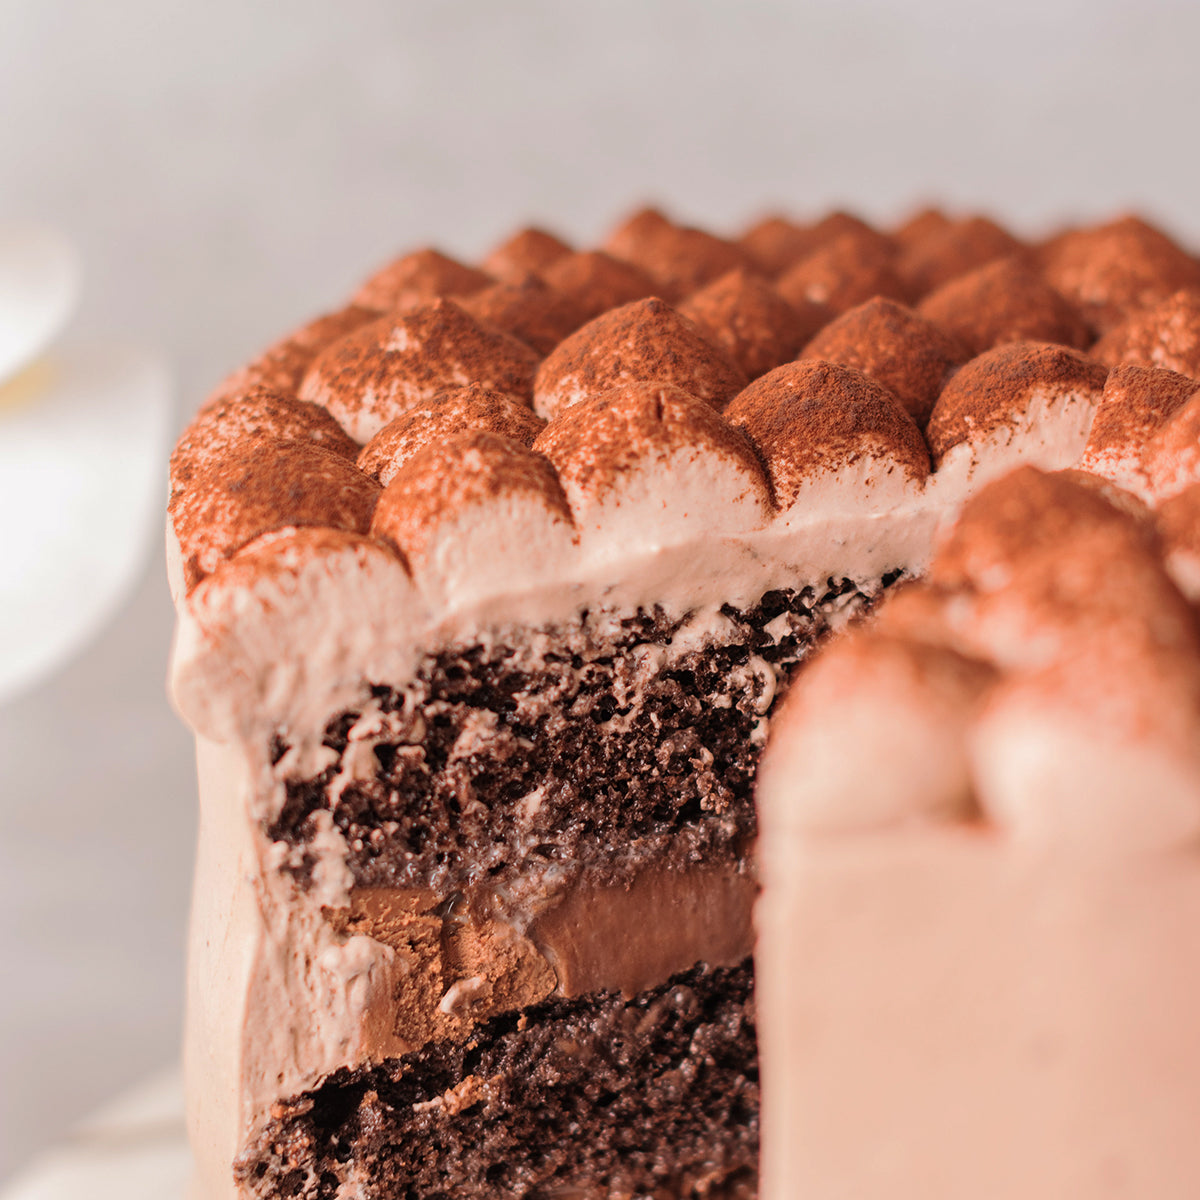 Chocolate custard cake | RecipeTin Eats